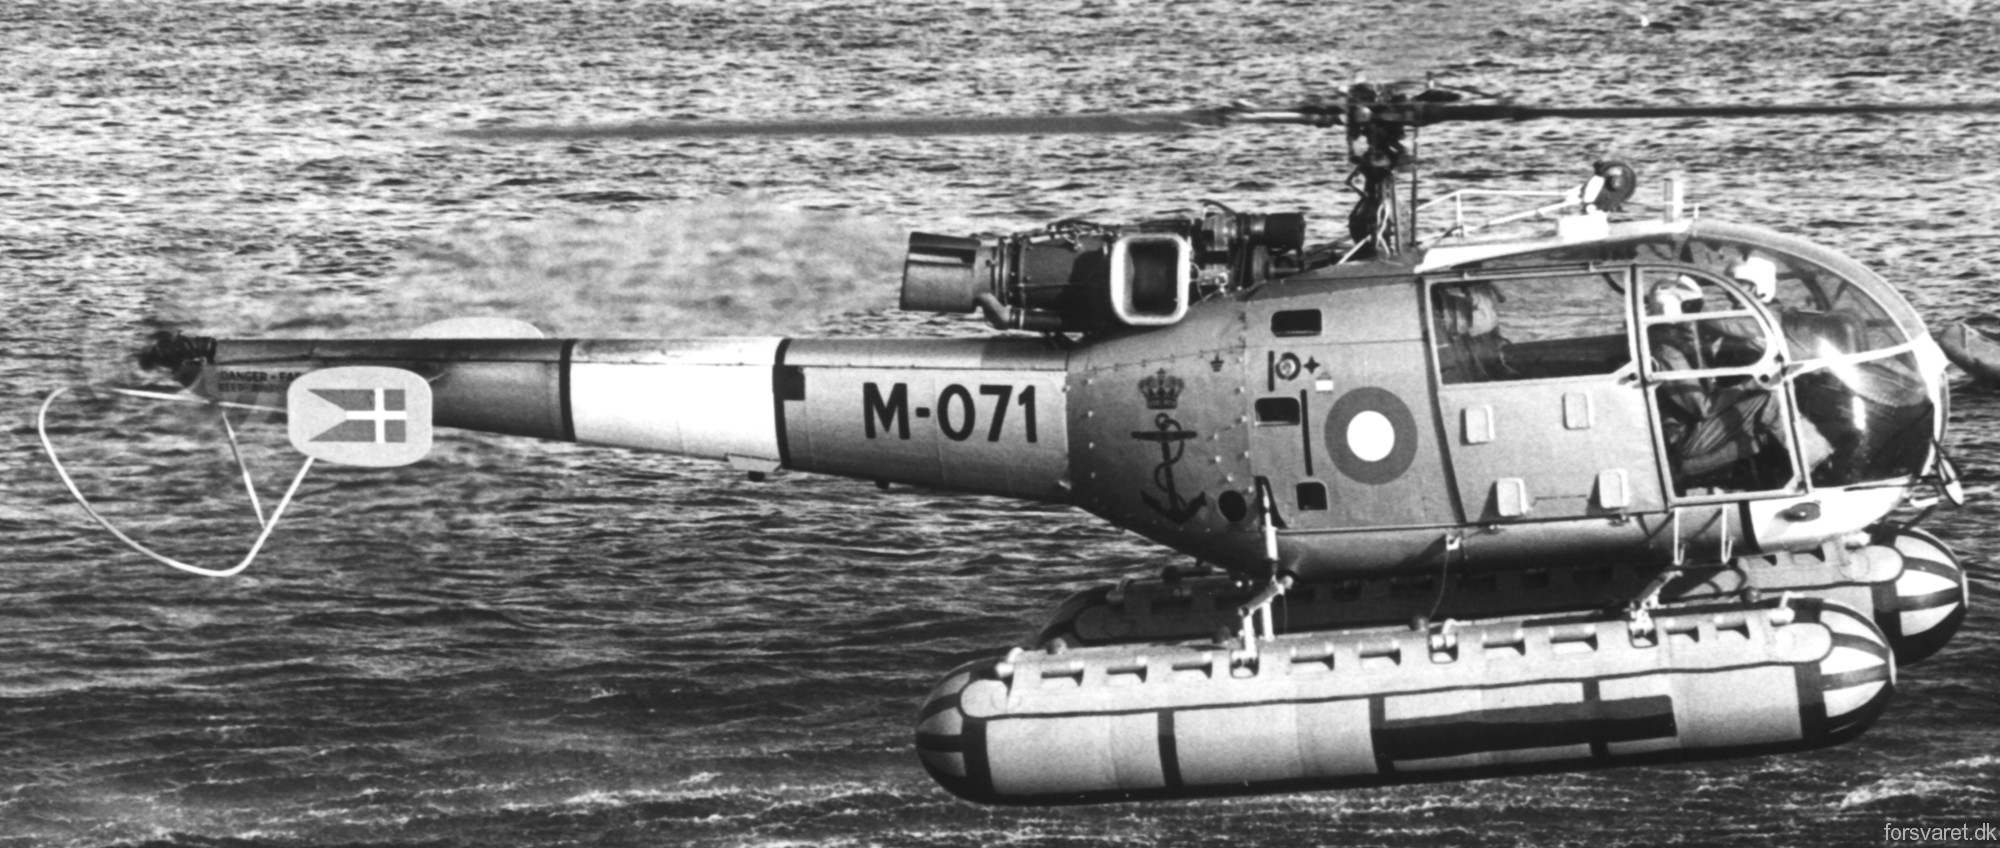 sa 316b alouette iii helicopter royal danish navy søværnet kongelige danske marine sud aviation m-071 20